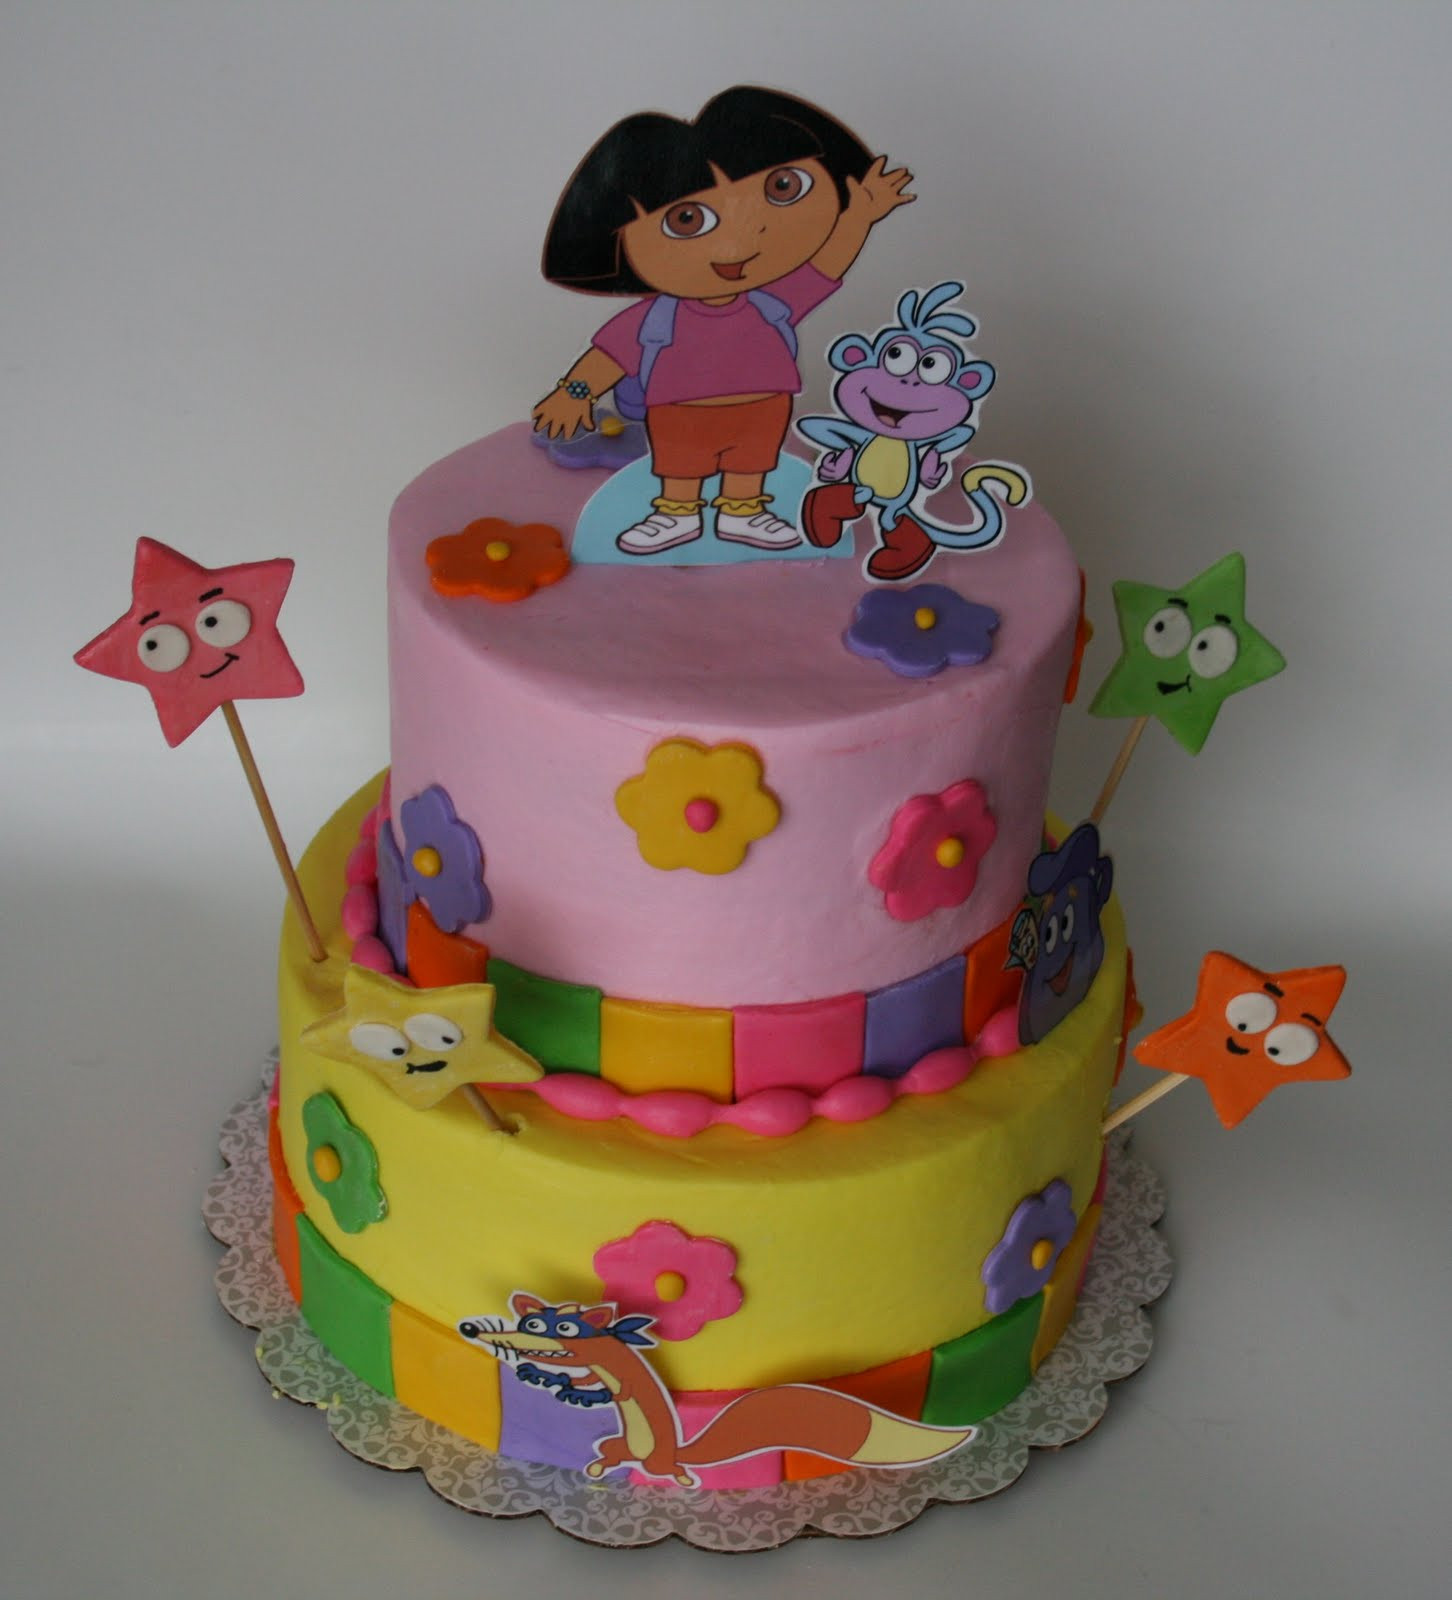 Dora The Explorer Birthday Cakes
 Dora Cakes – Decoration Ideas